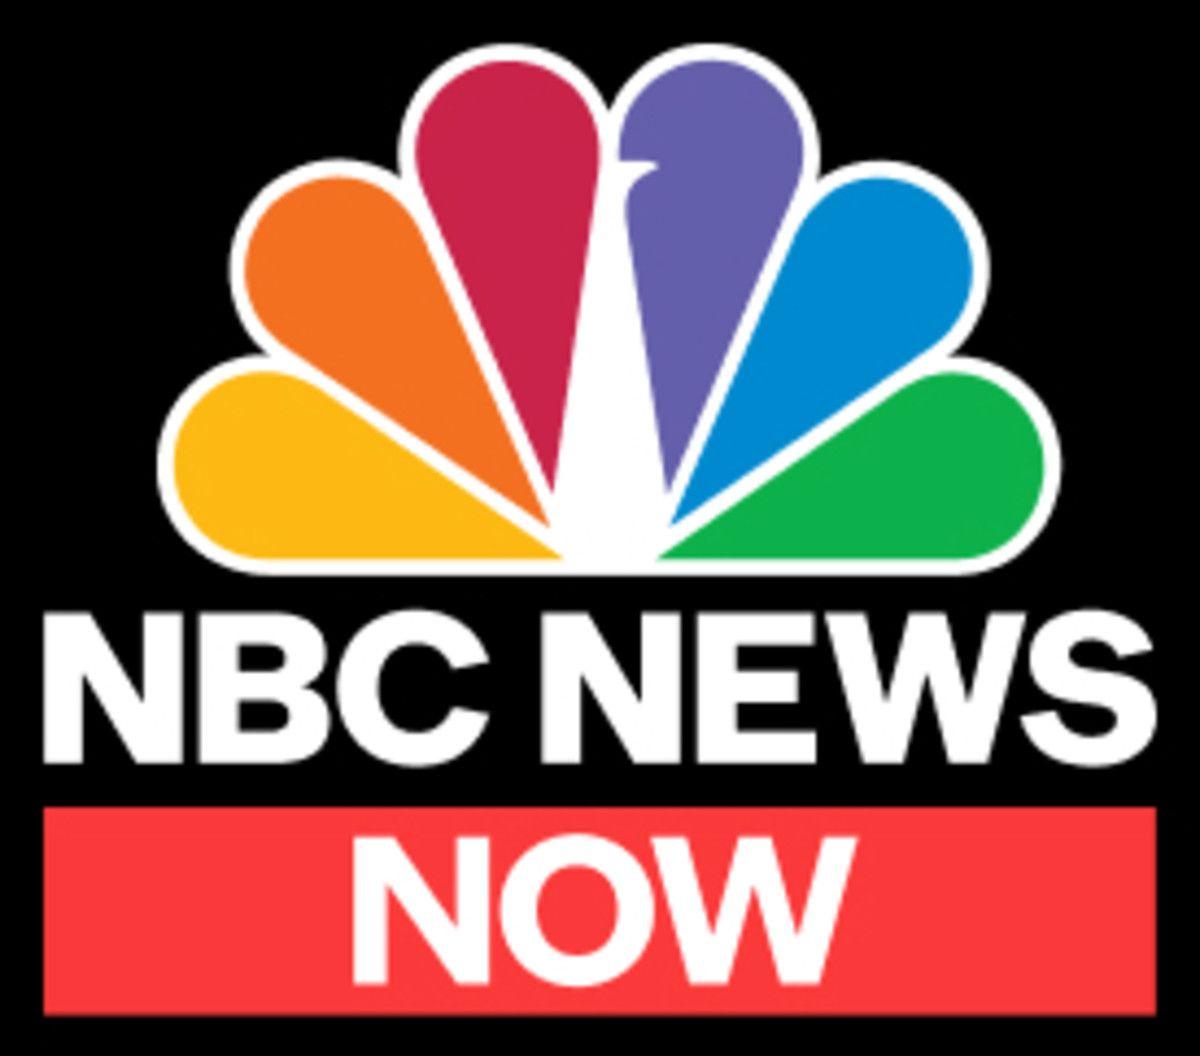 NBC.com Logo - NBC News Now Expands Live OTT Programming - Broadcasting & Cable